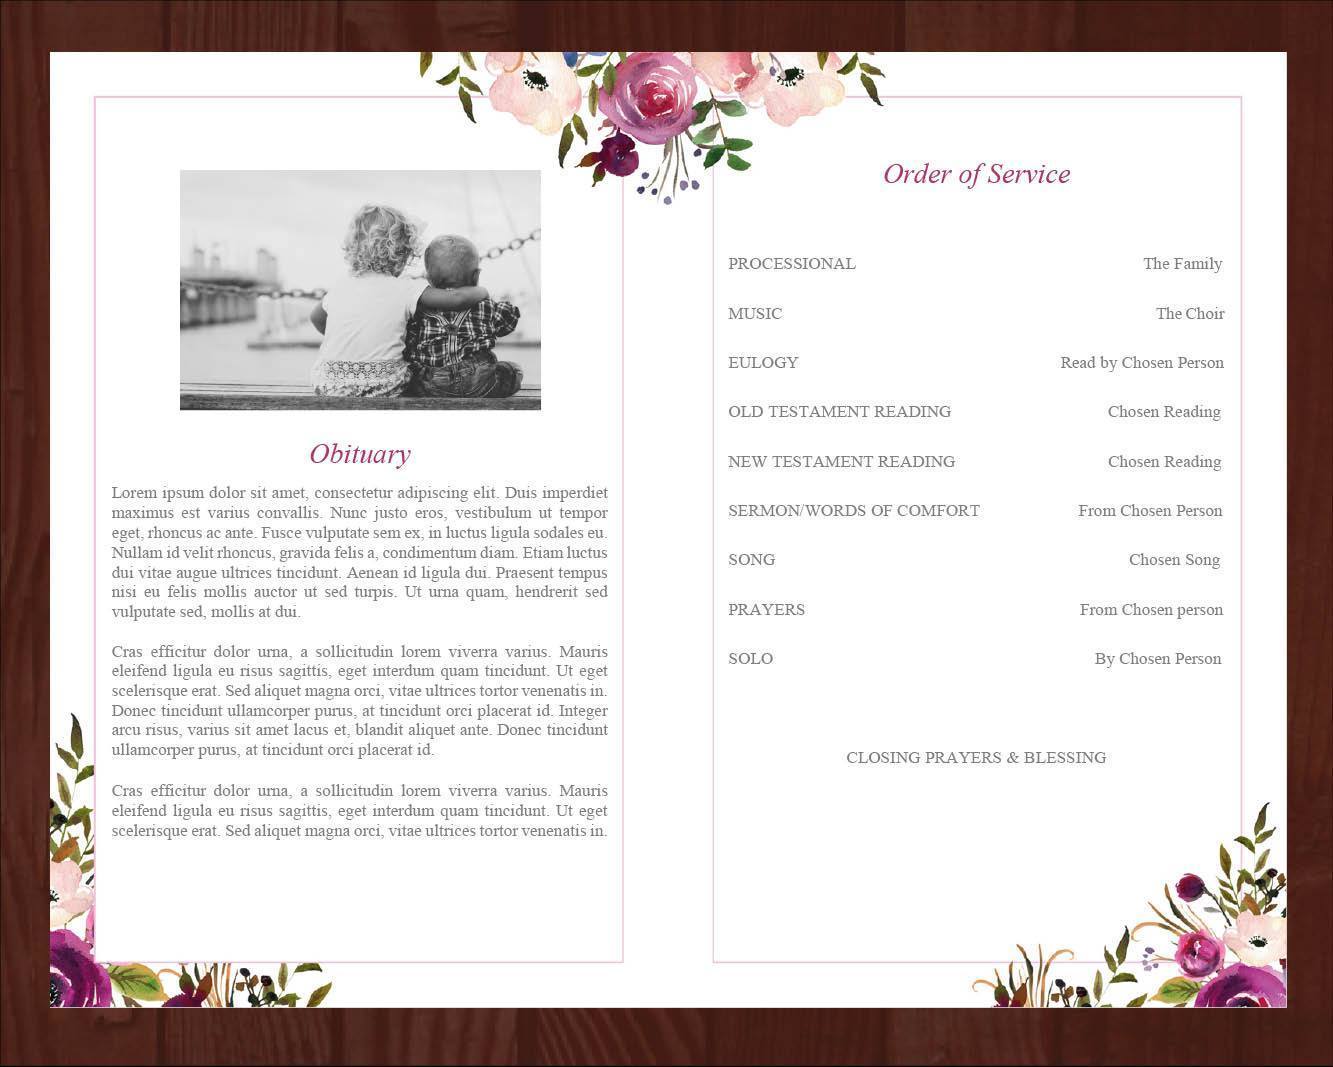 4 Page Purple Roses Funeral Program Template + Prayer Card